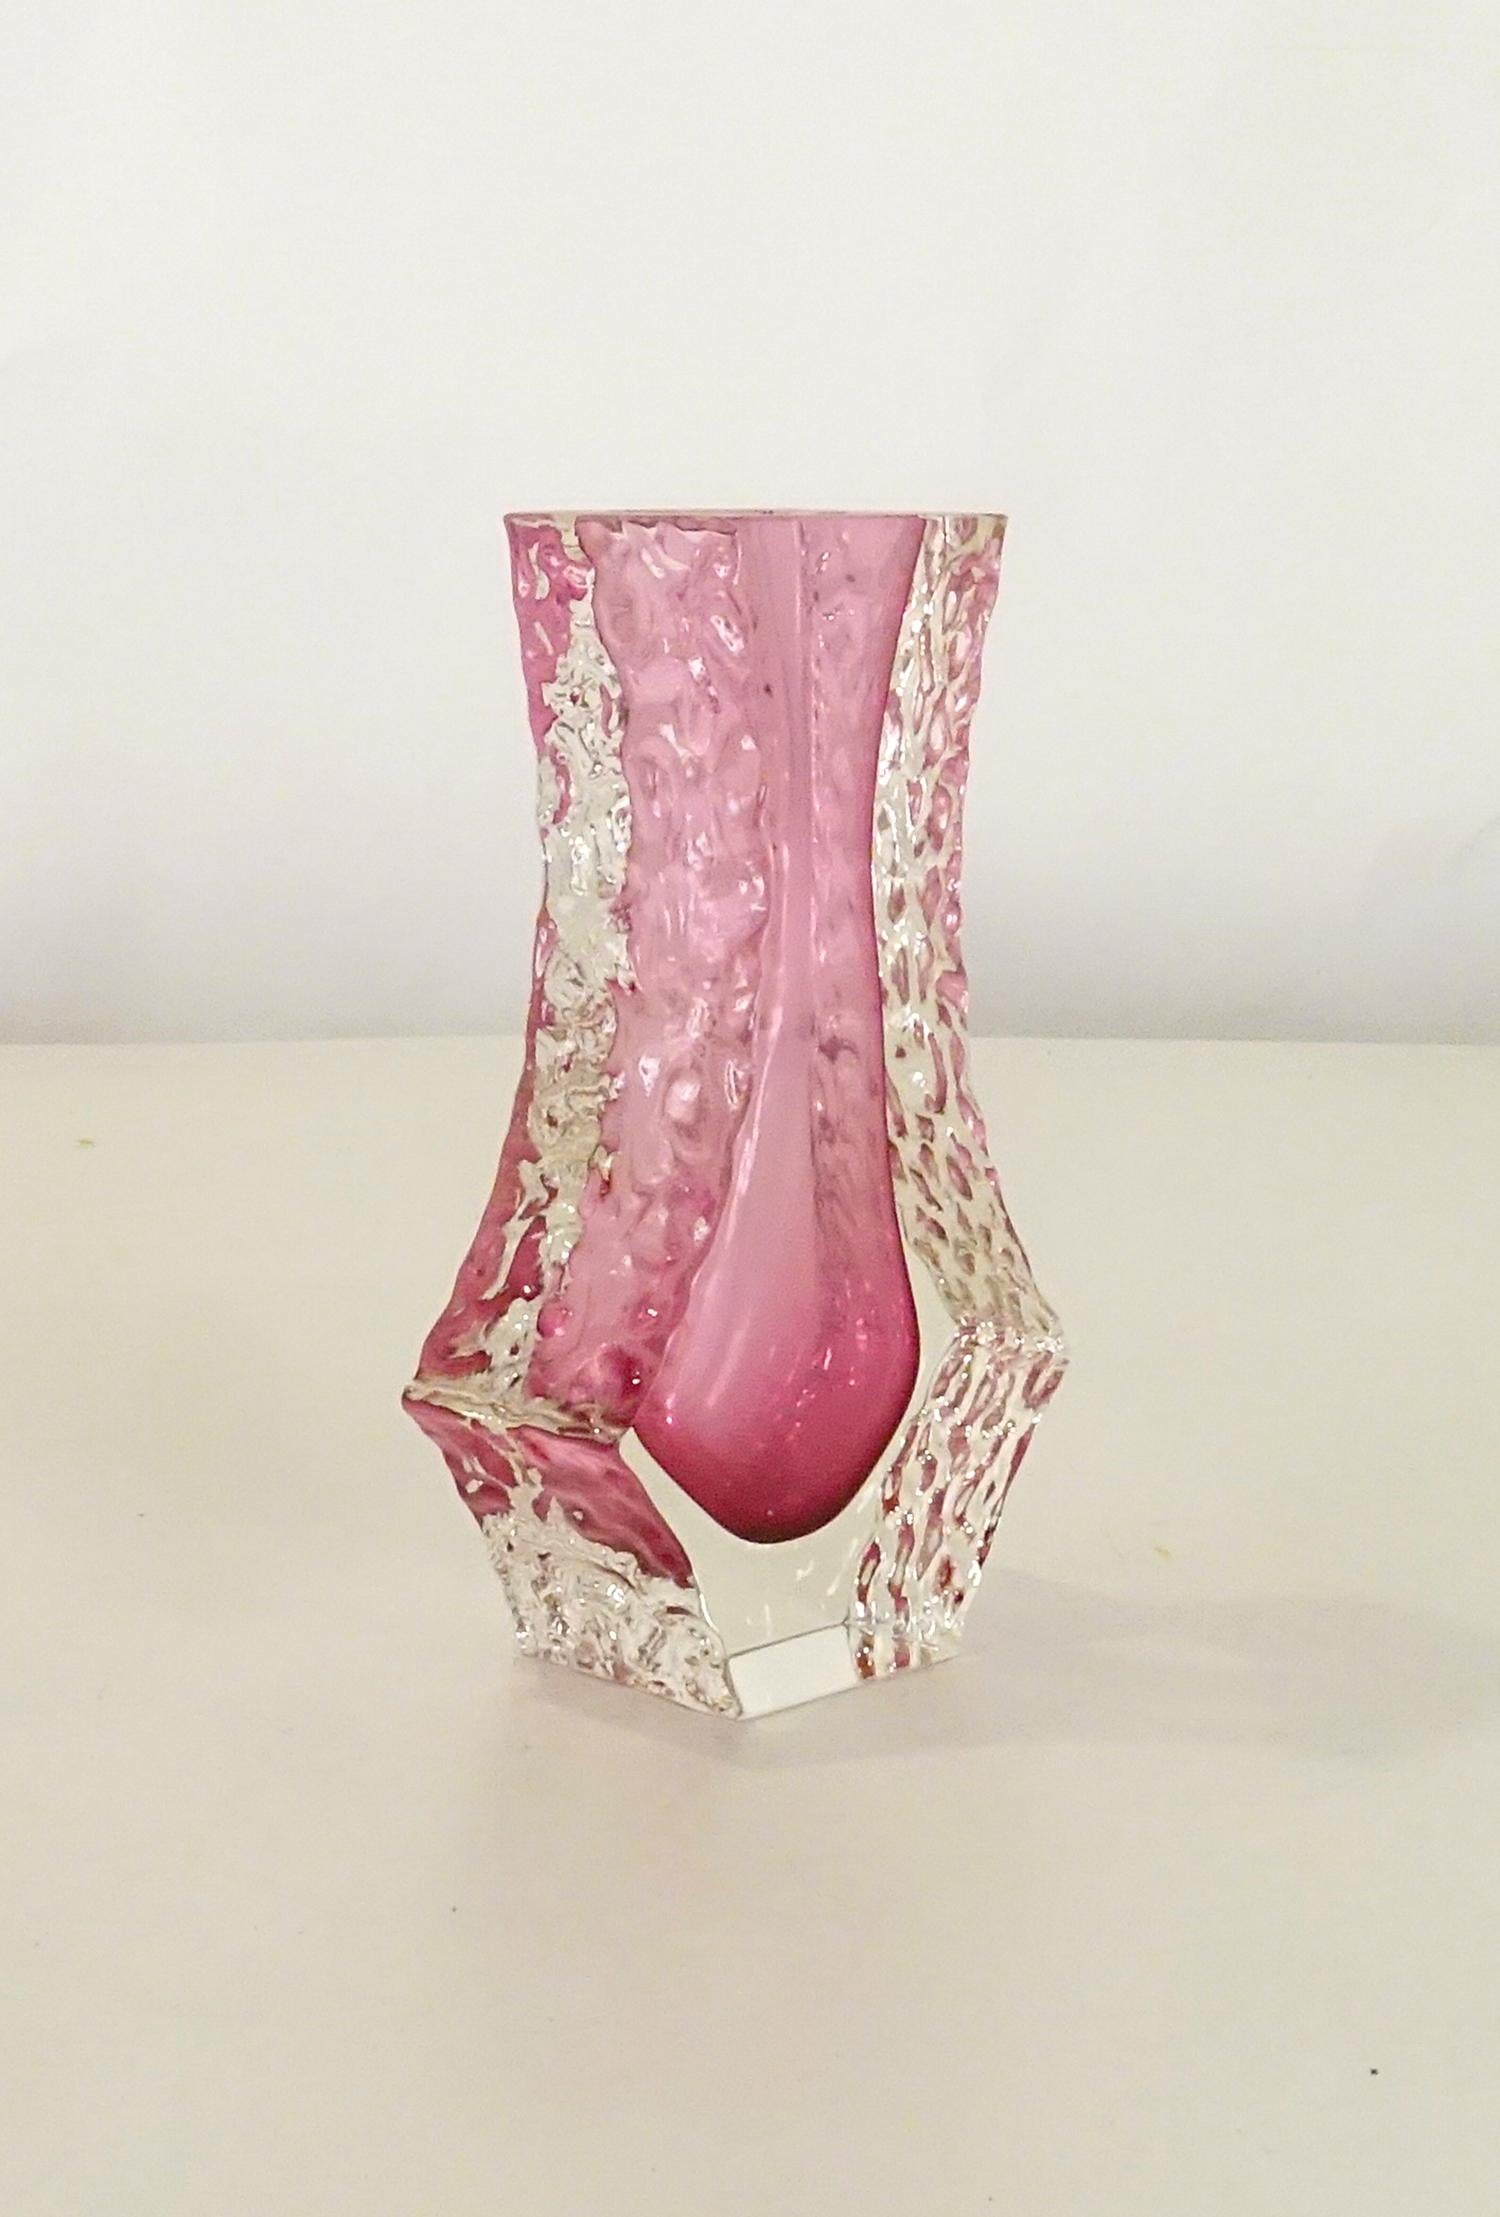 Murano Glass Mandruzzato Murano Sommerso Ice Pink Faceted Vase For Sale